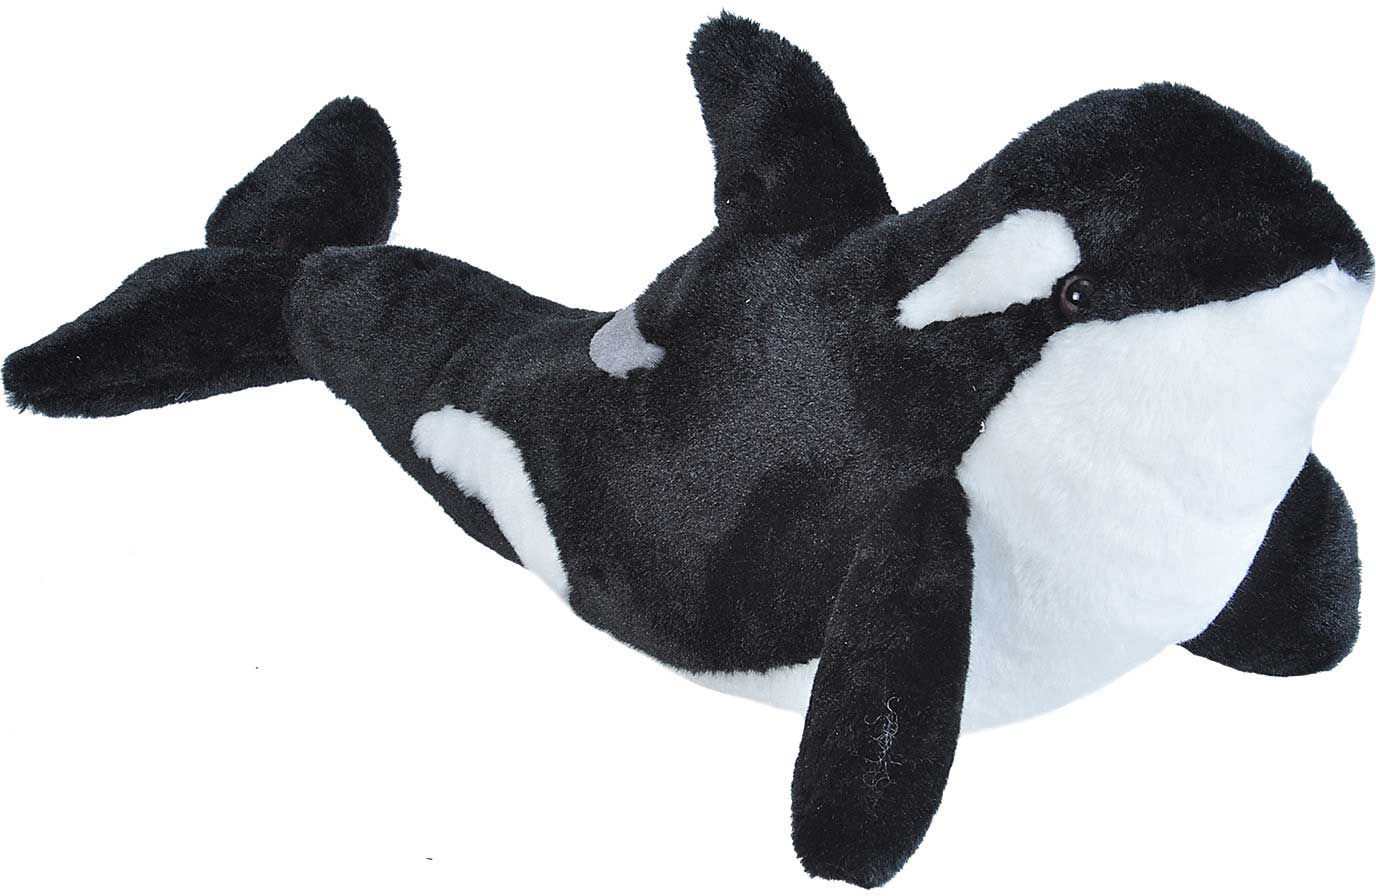 stuffed killer whale